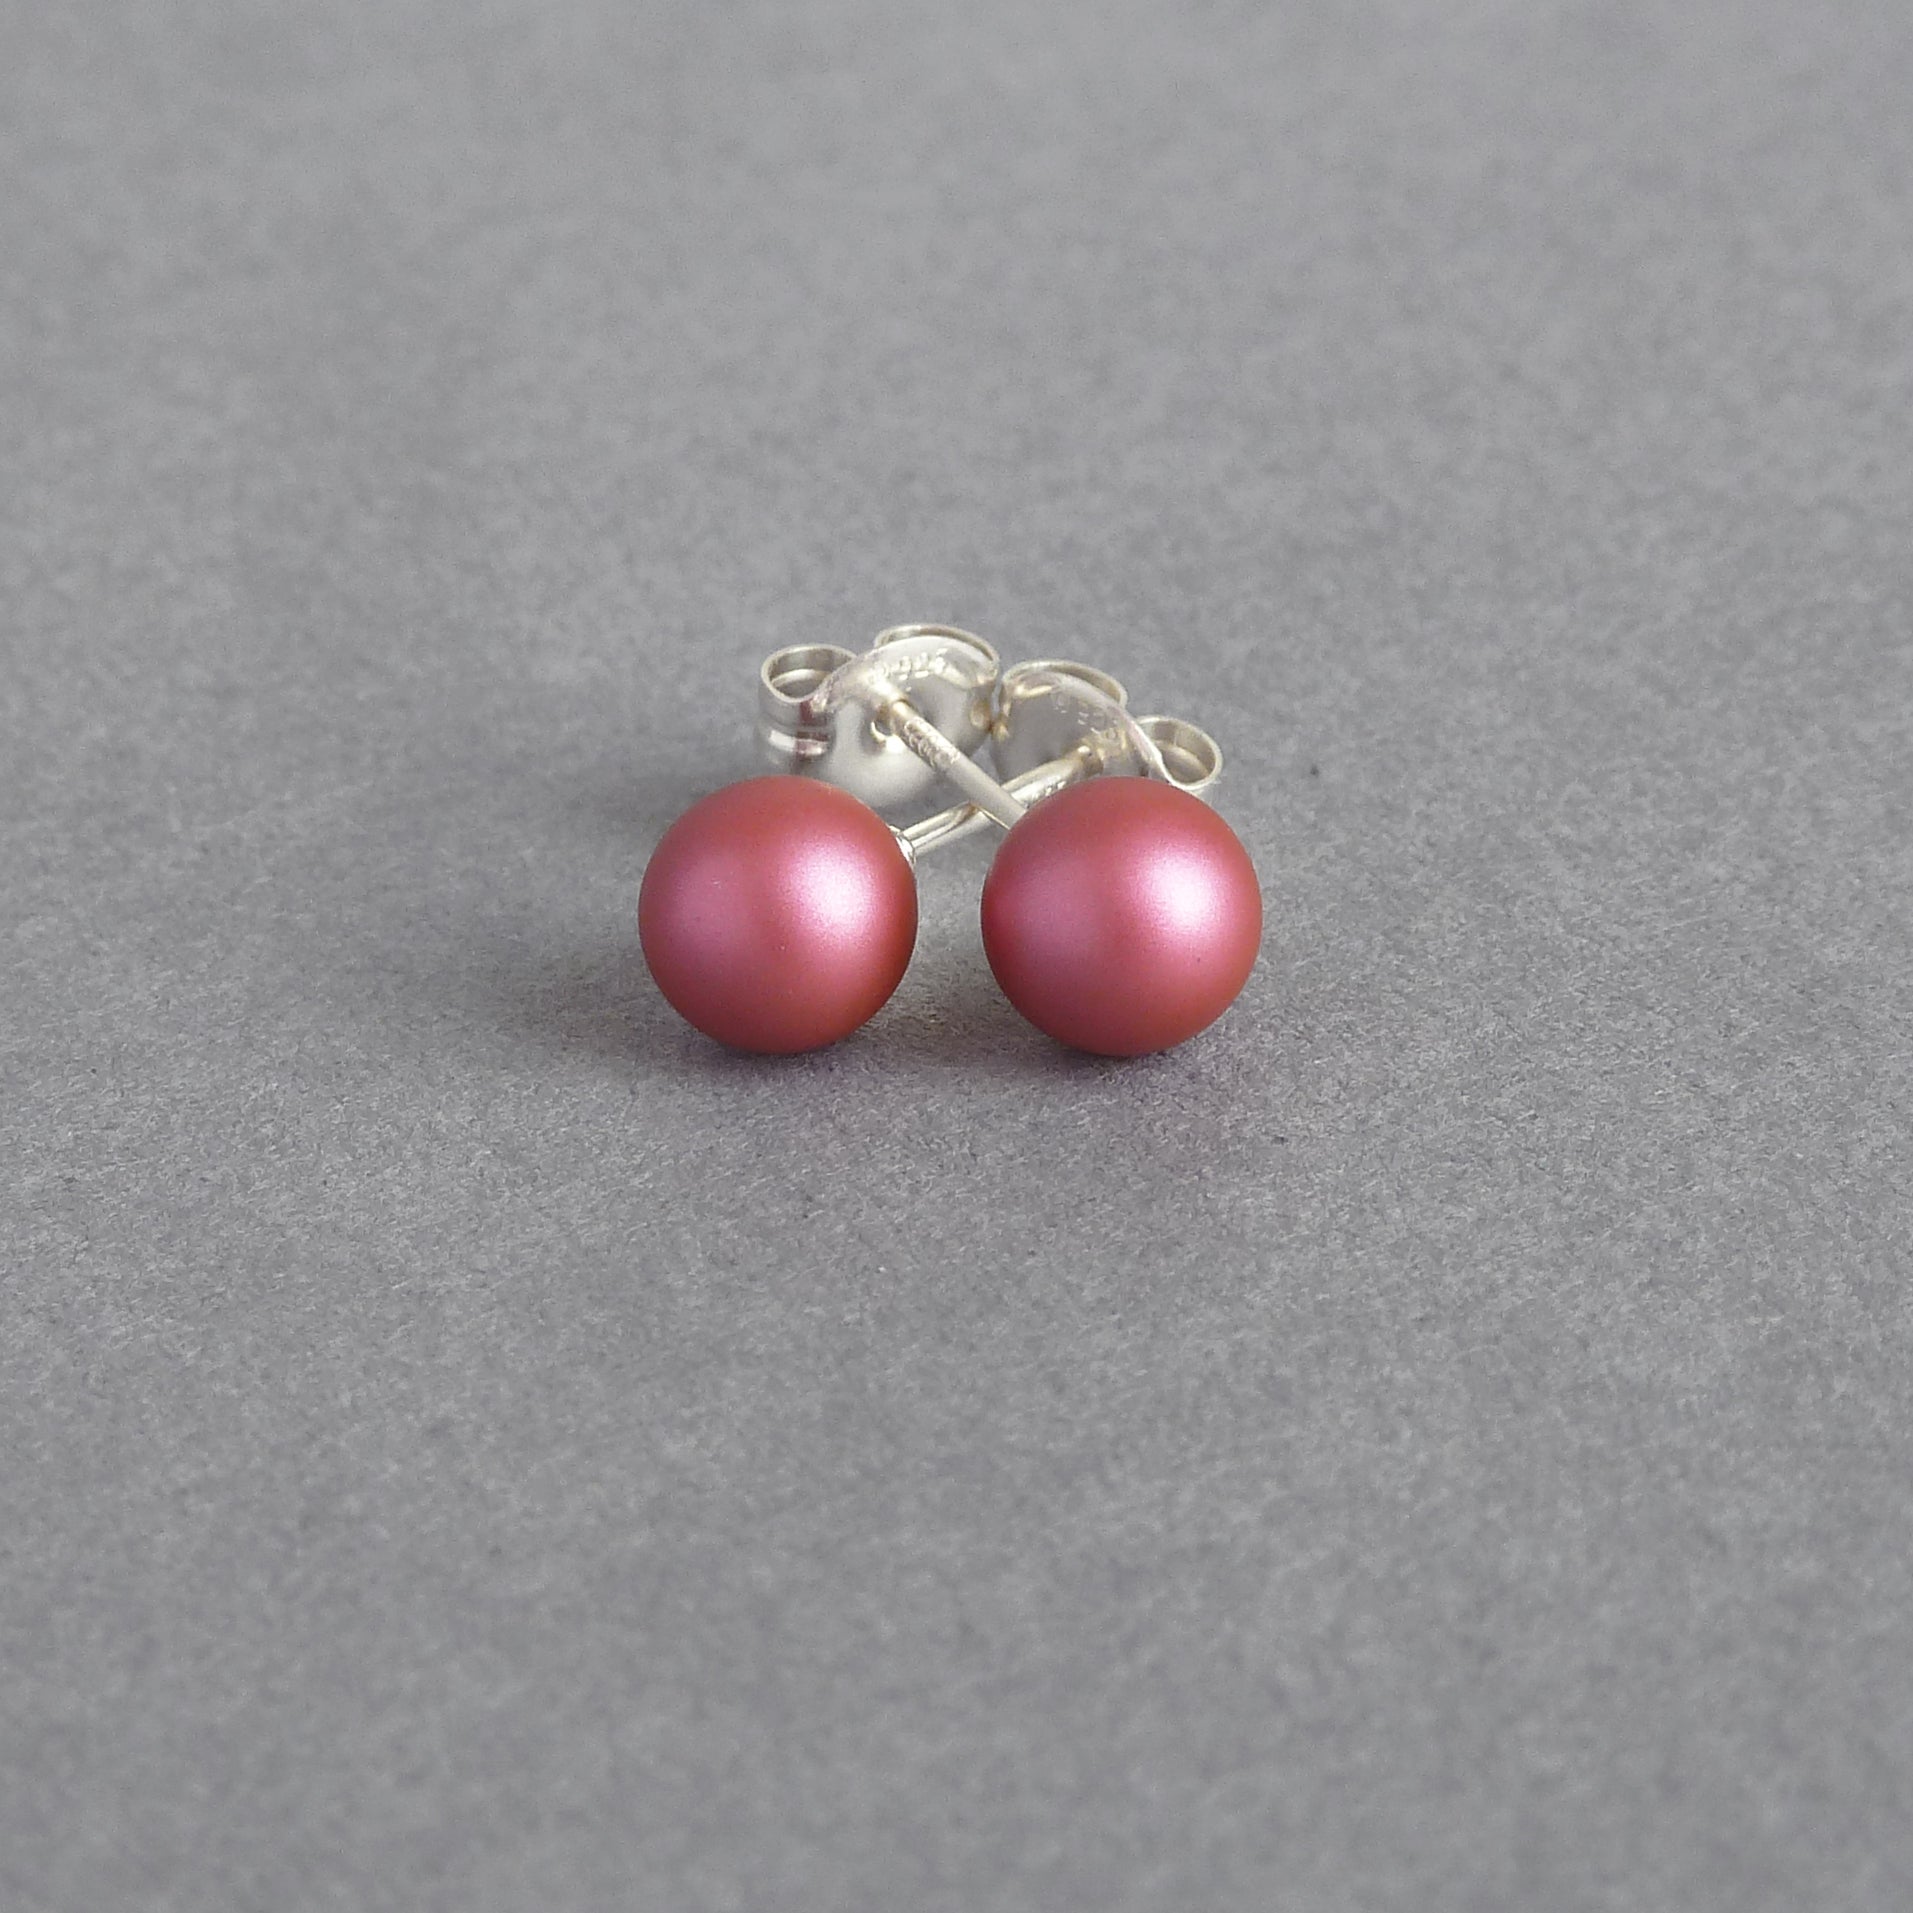 6mm raspberry pink stud earrings